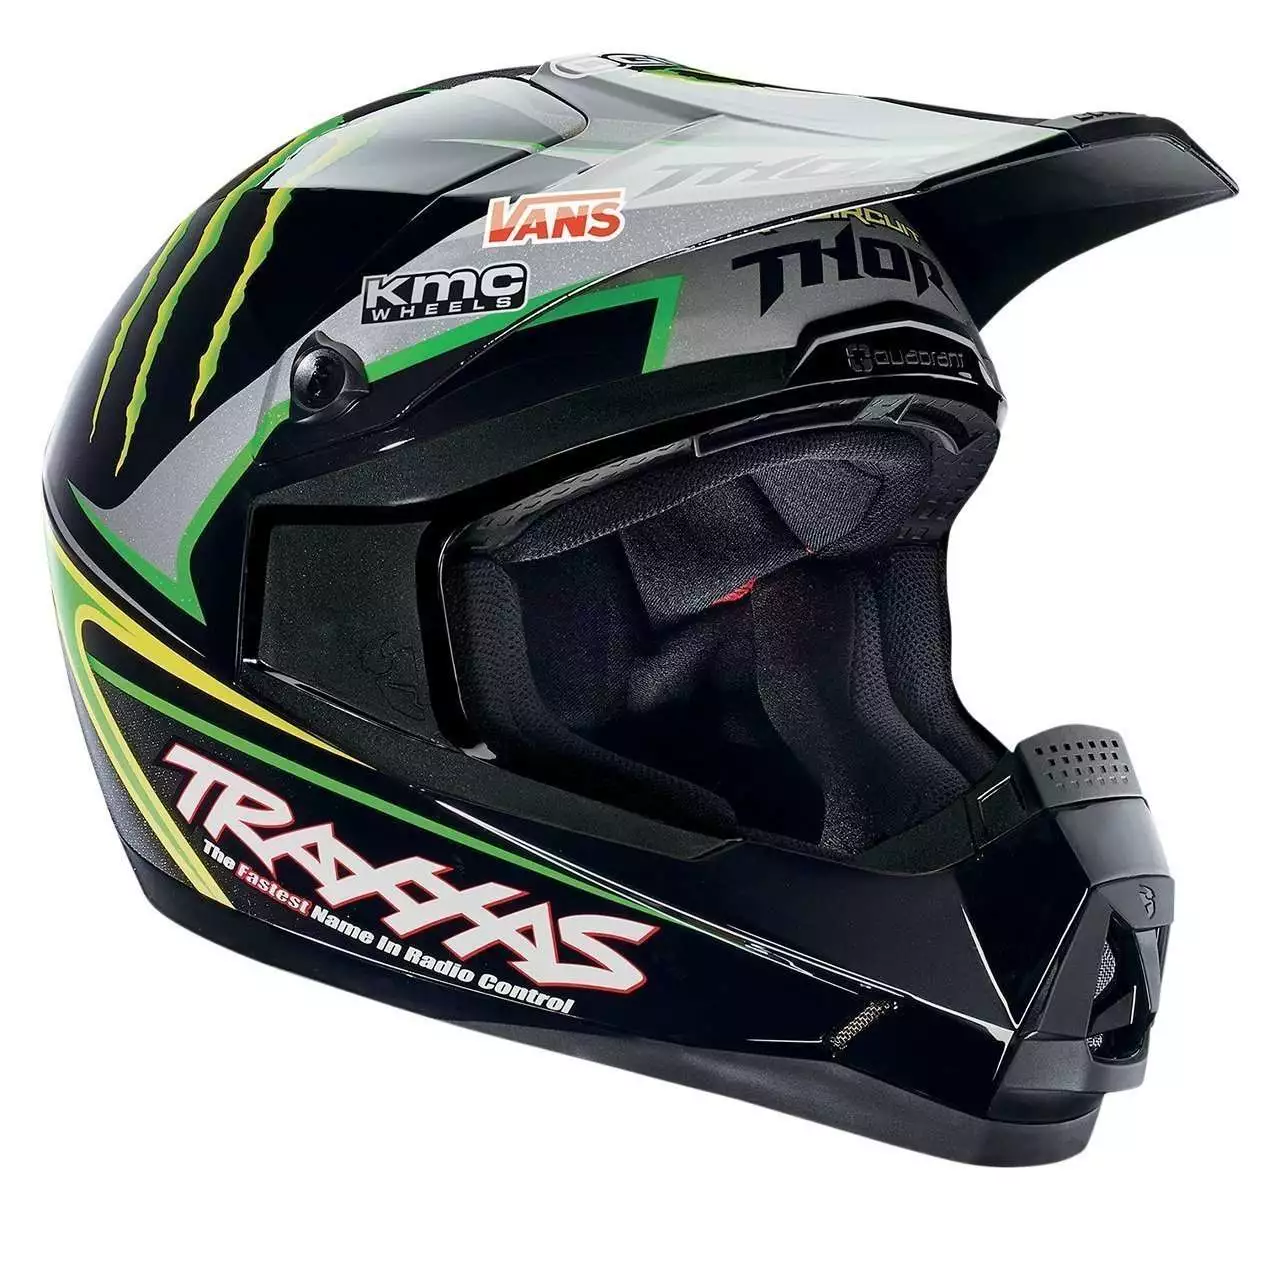 Thor S4 Quadrant Pro Circuit motorcycle helmet buy price, photos, reviews in the online Store Partner-Moto